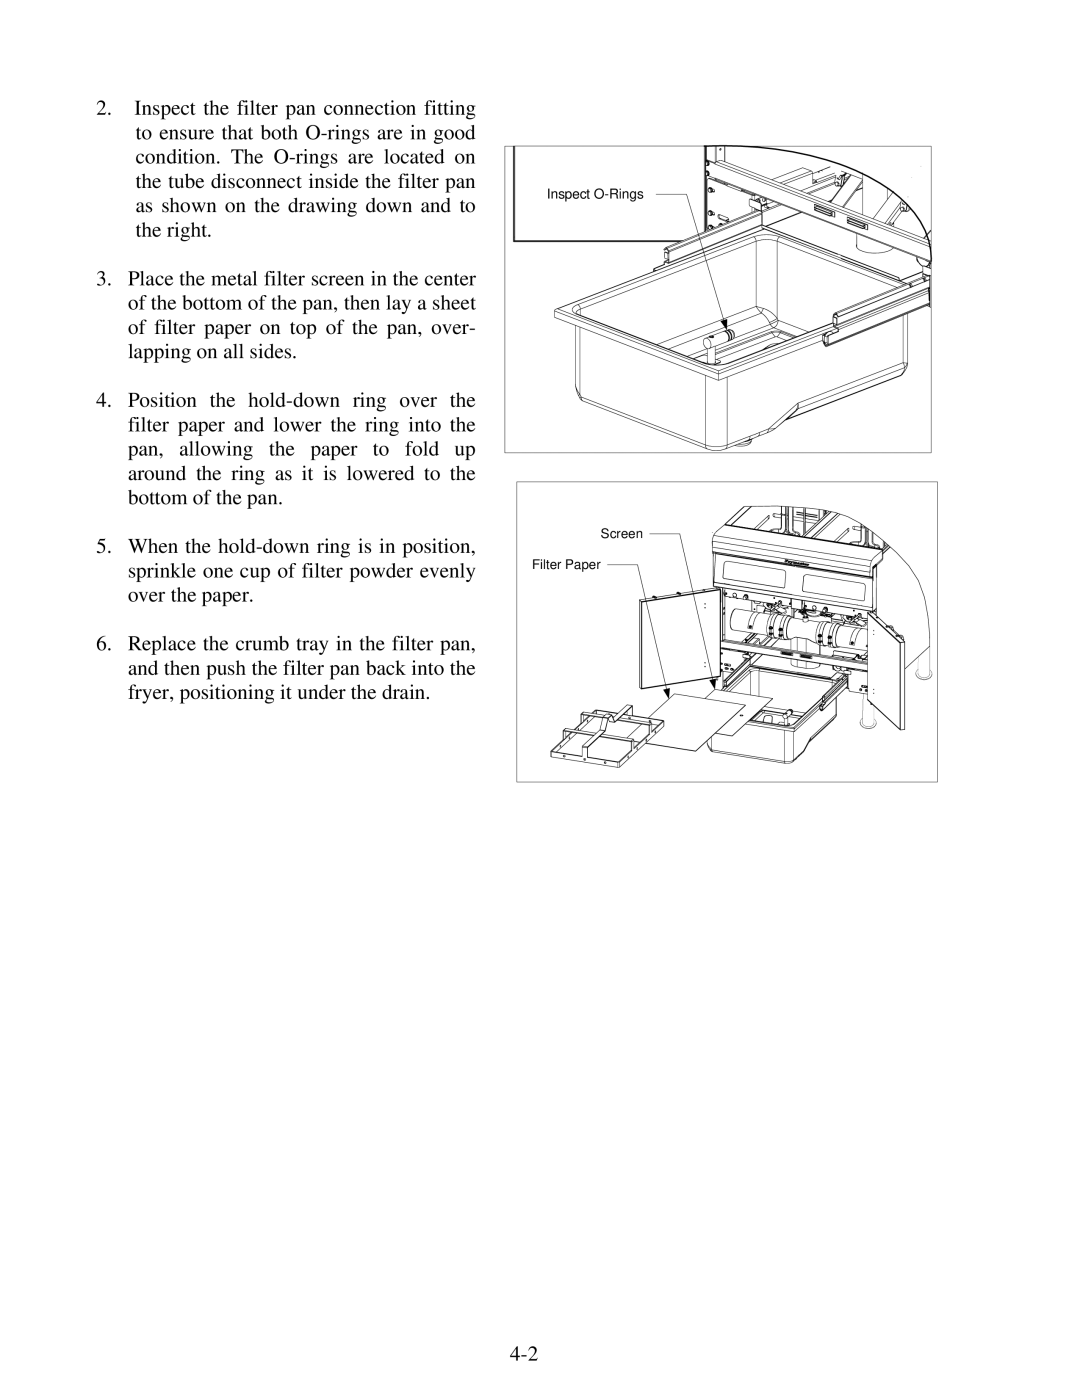 Frymaster E4 manual Inspect O-Rings Screen Filter Paper 